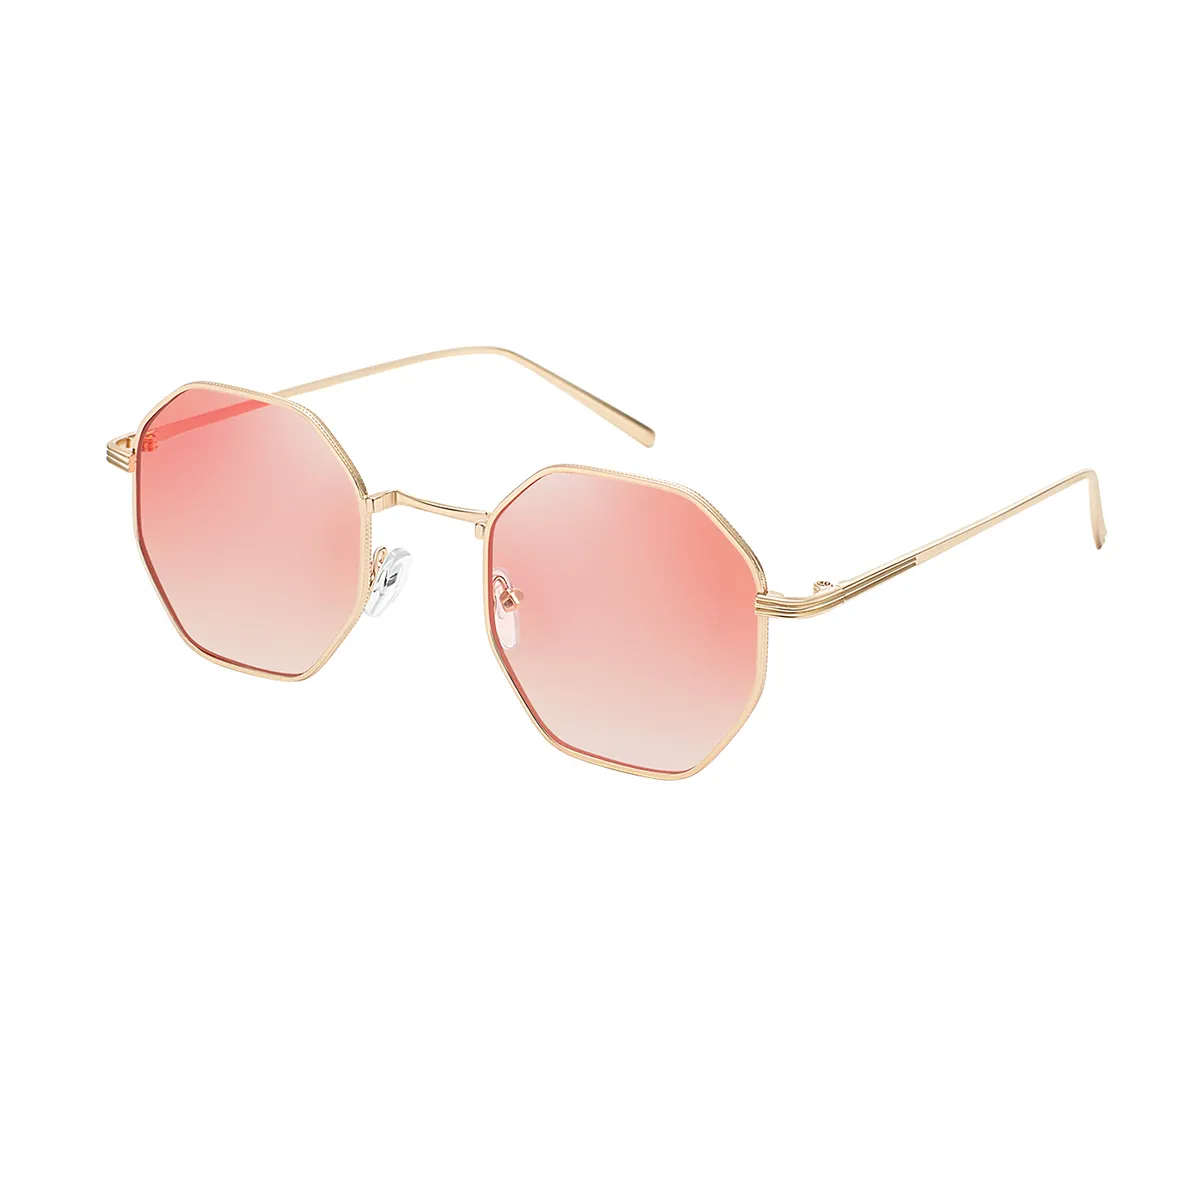 Shepard - Geometric Gold Sunglasses for Women